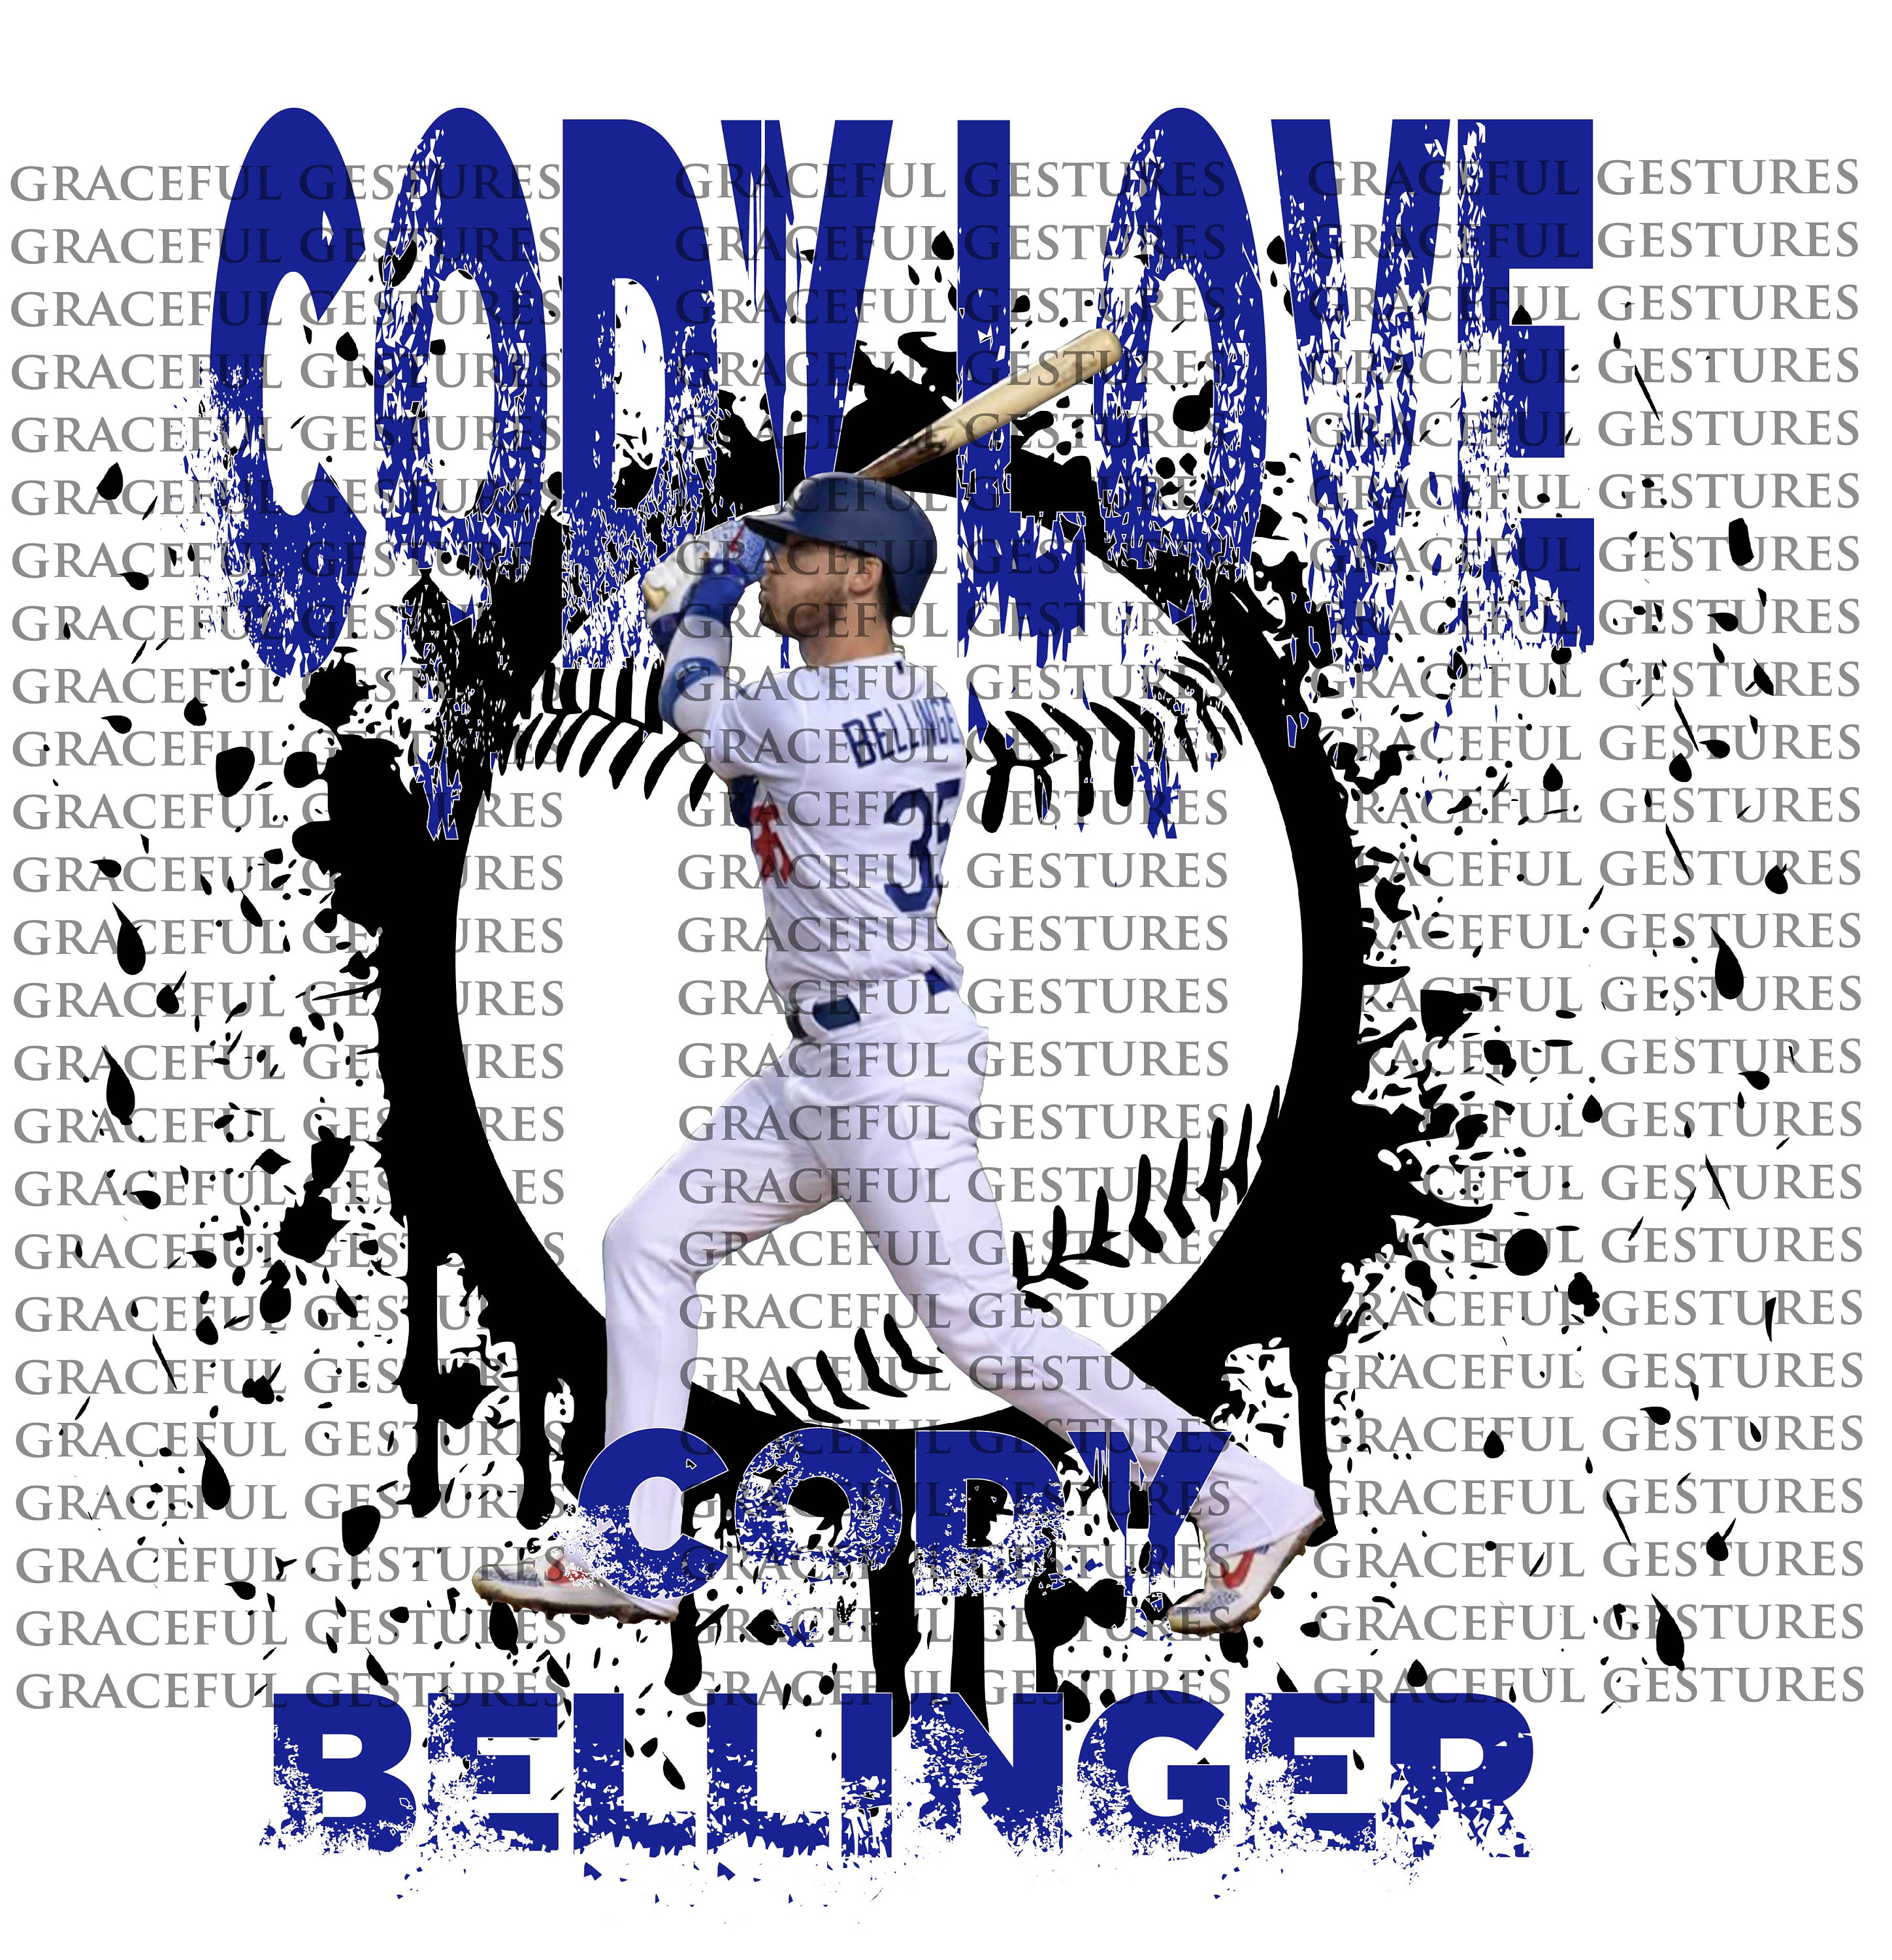 Large 14/16) - Outerstuff Cody Bellinger Los Angeles Dodgers 35